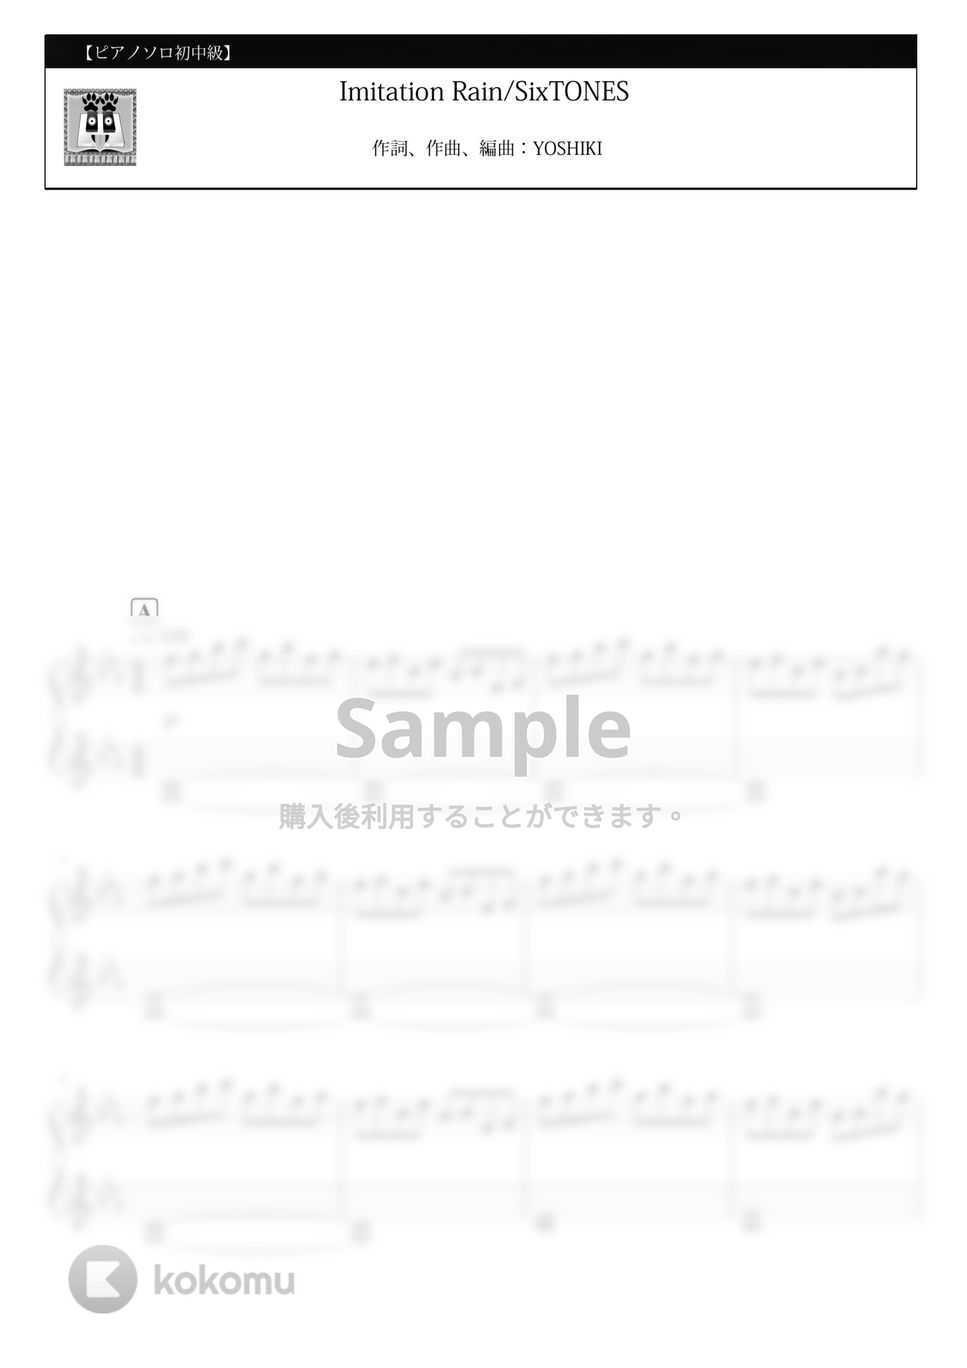 SixTONES - Imitation Rain (難易度：★★☆☆☆) by Dさん